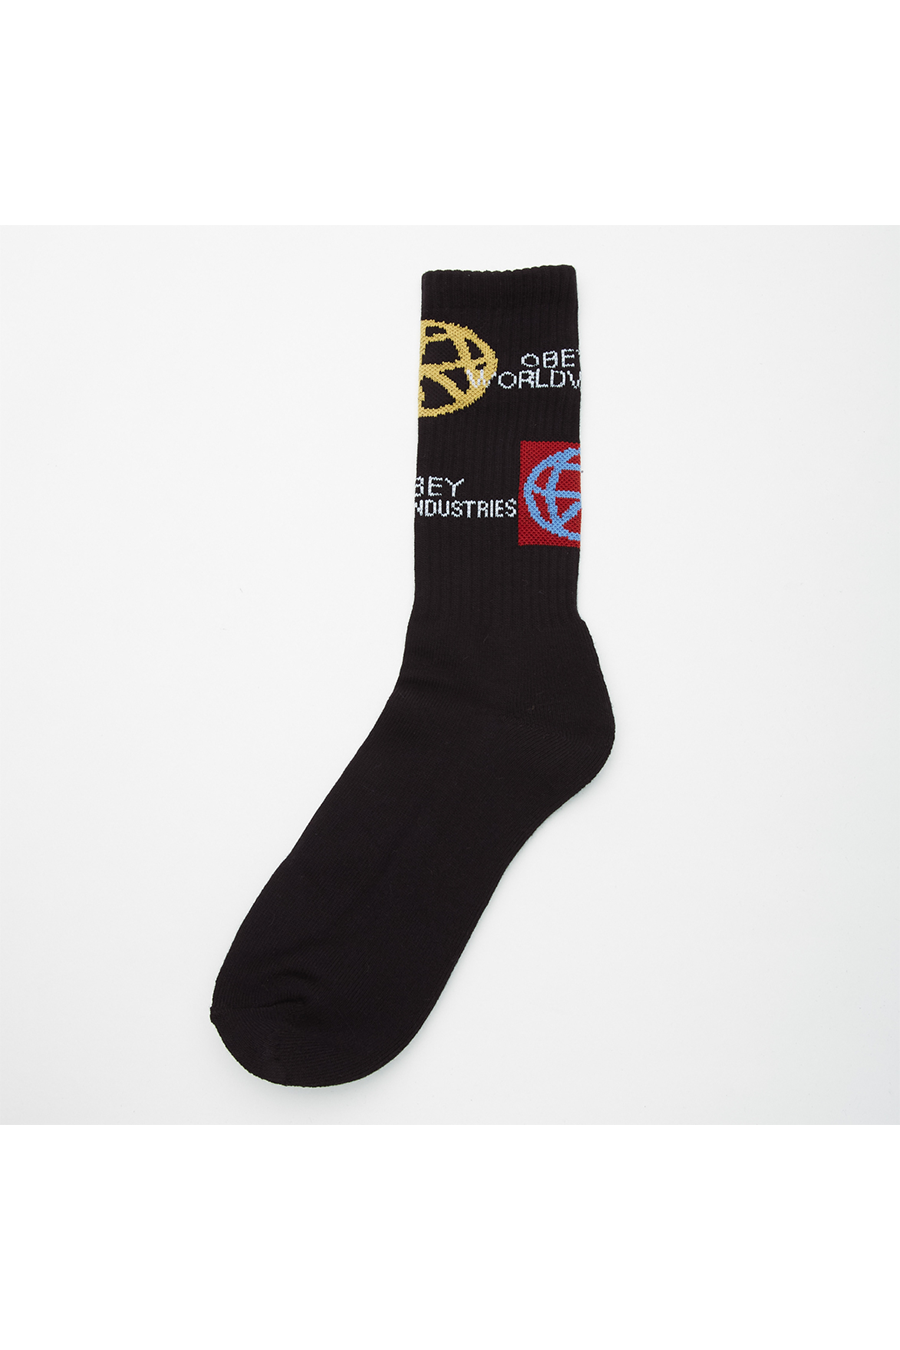 Industries Socks | Black Multi - Main Image Number 2 of 2